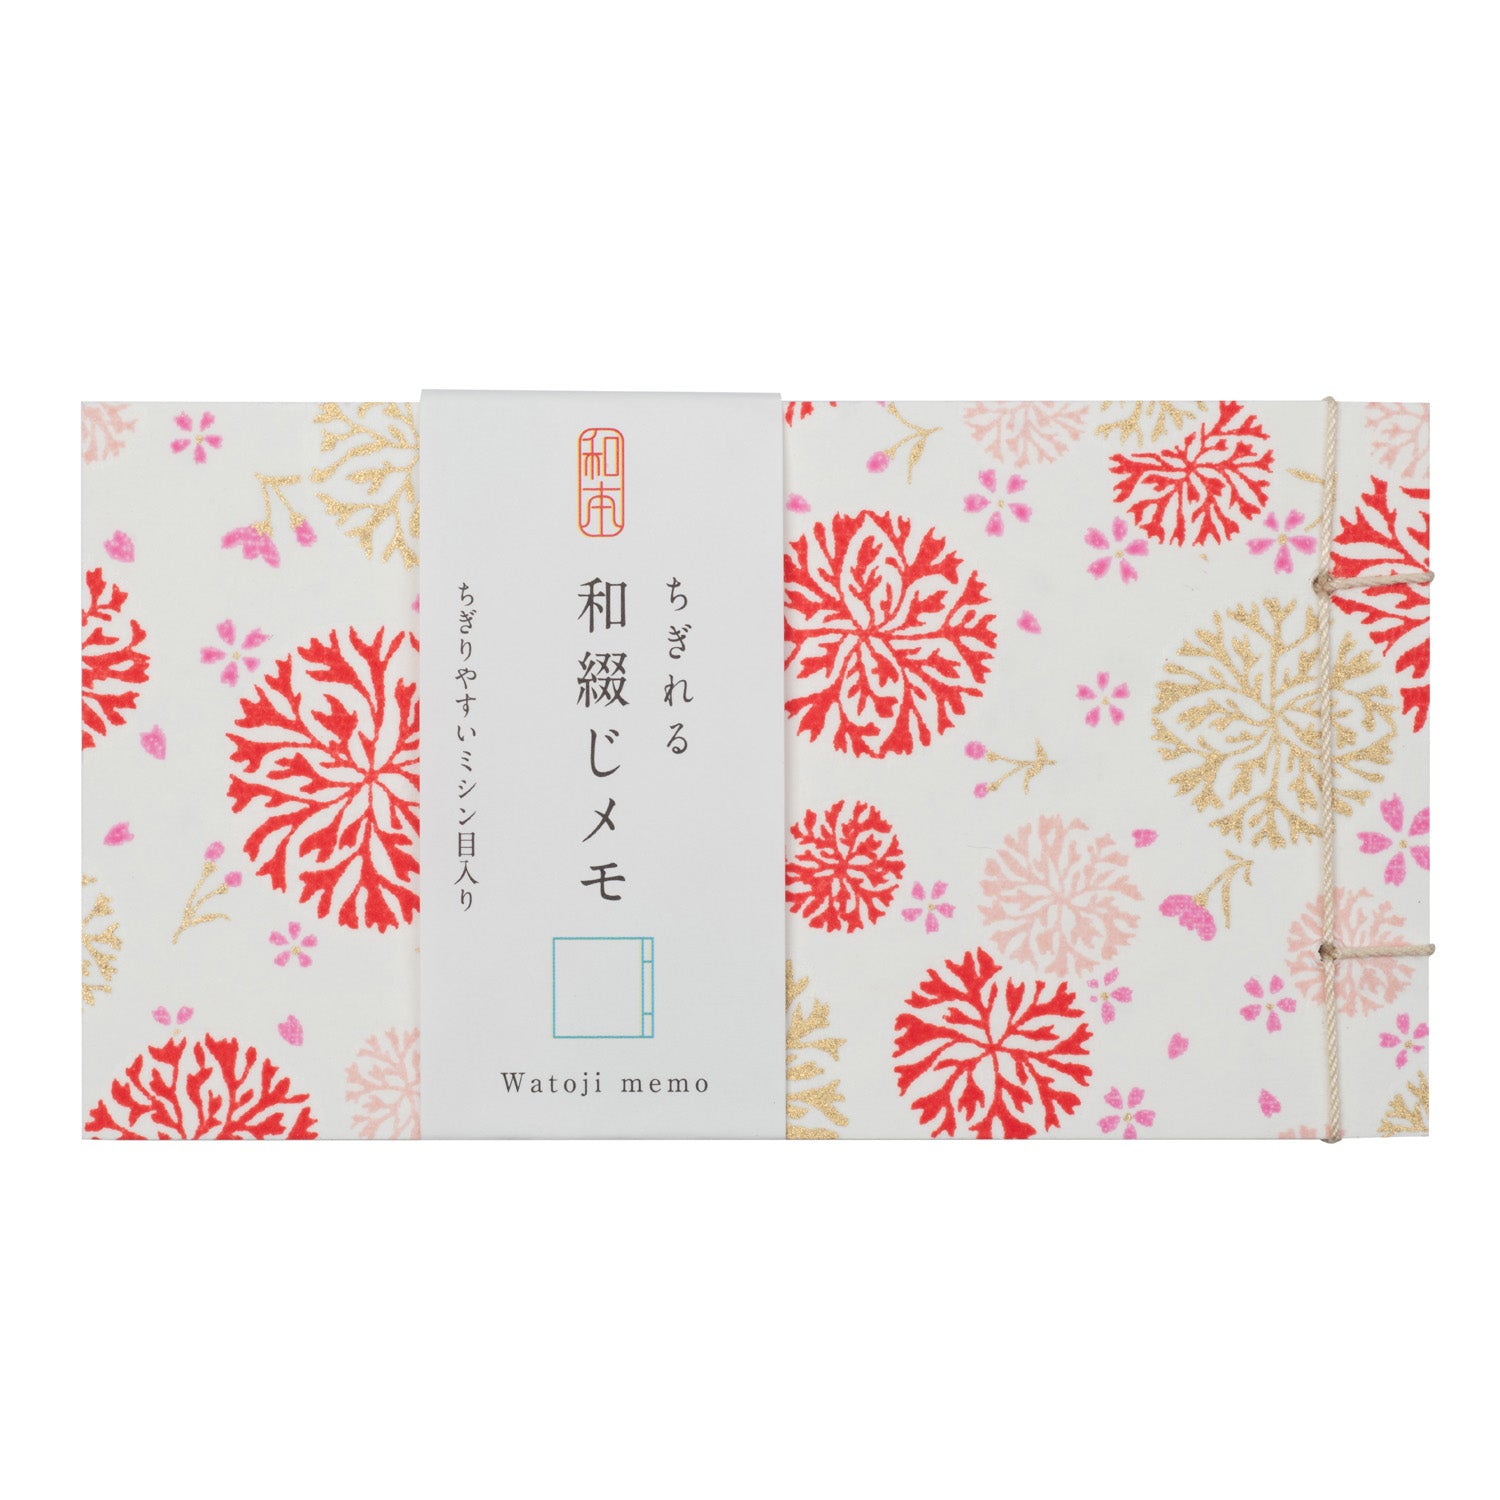 Hana Kessho Yuzen Mini Japanese Memo Pad and label